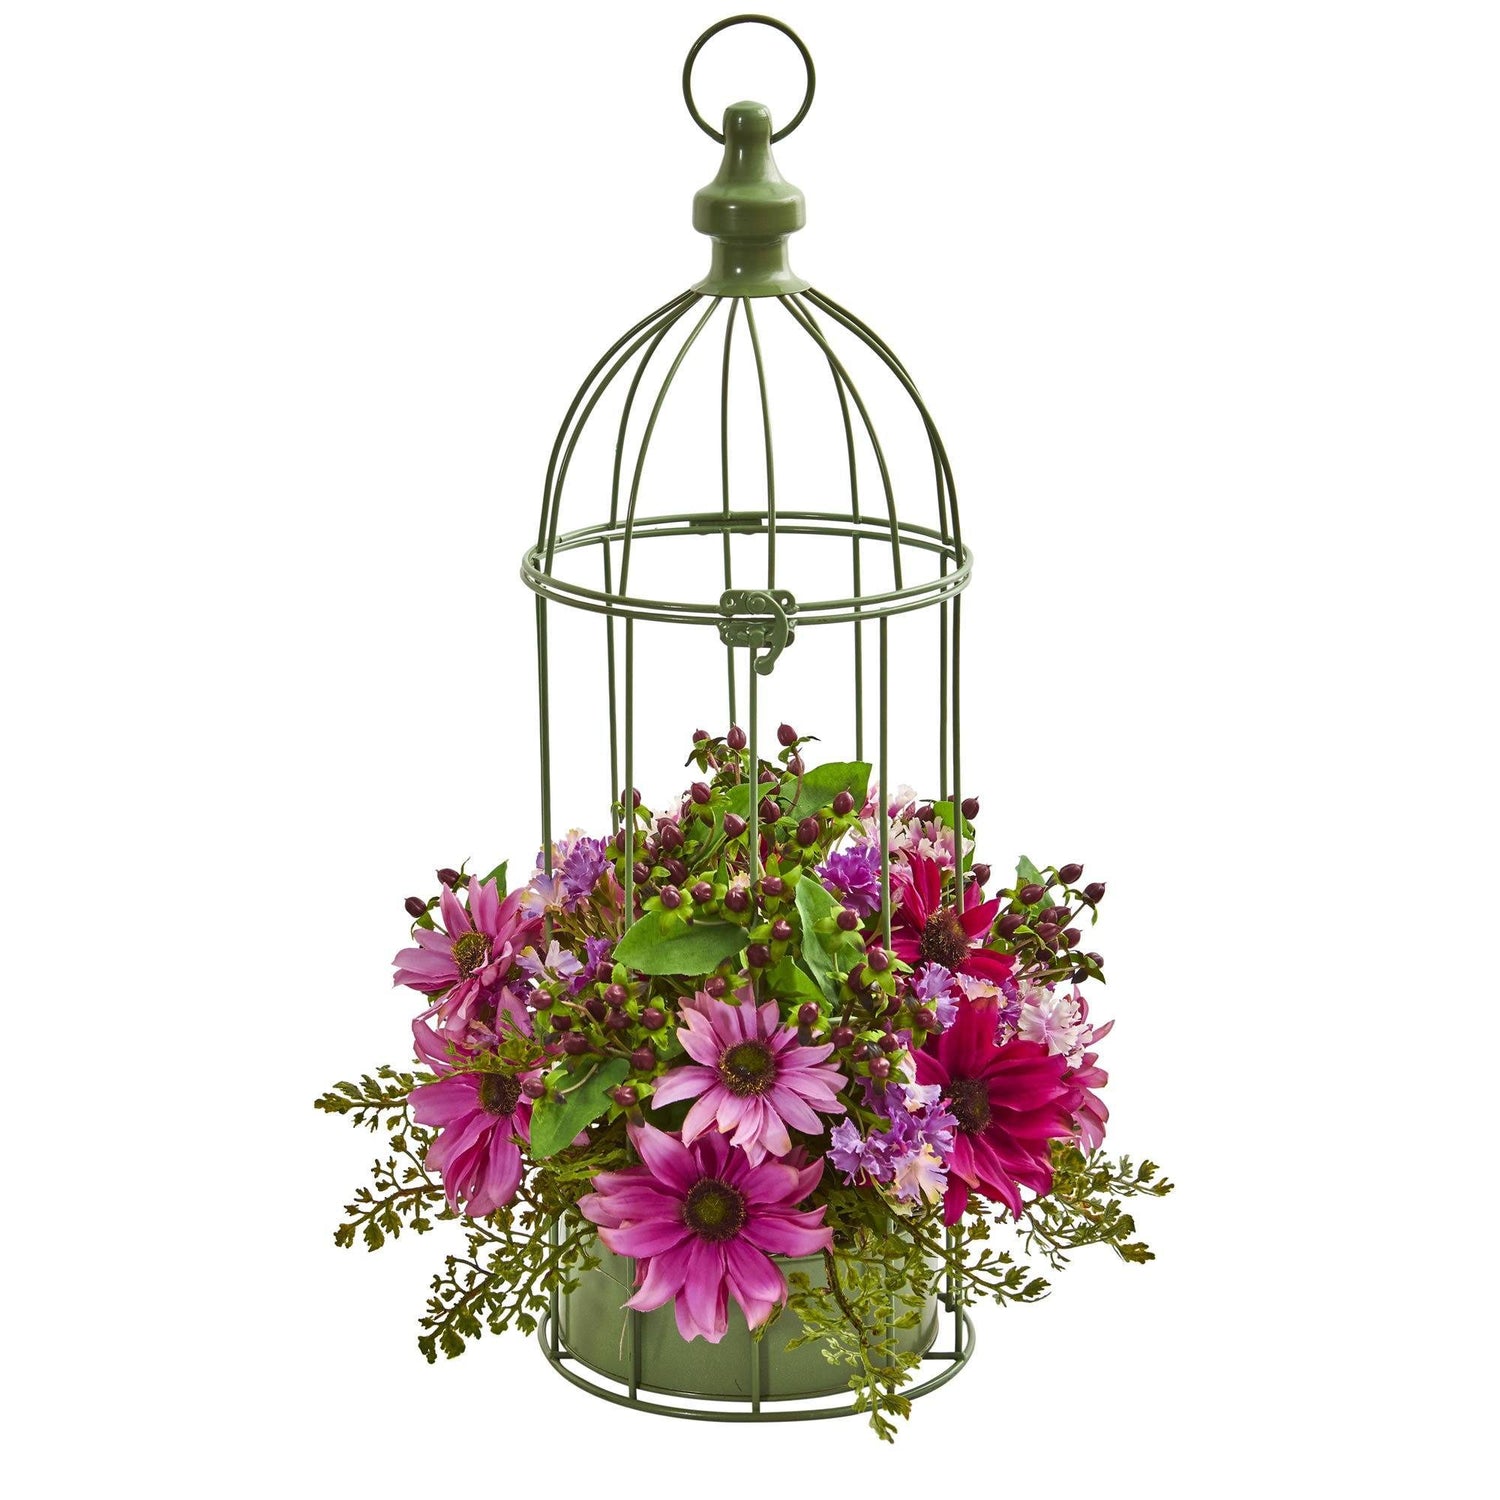 Daisy Artificial Arrangement in Decorative Bird Cage